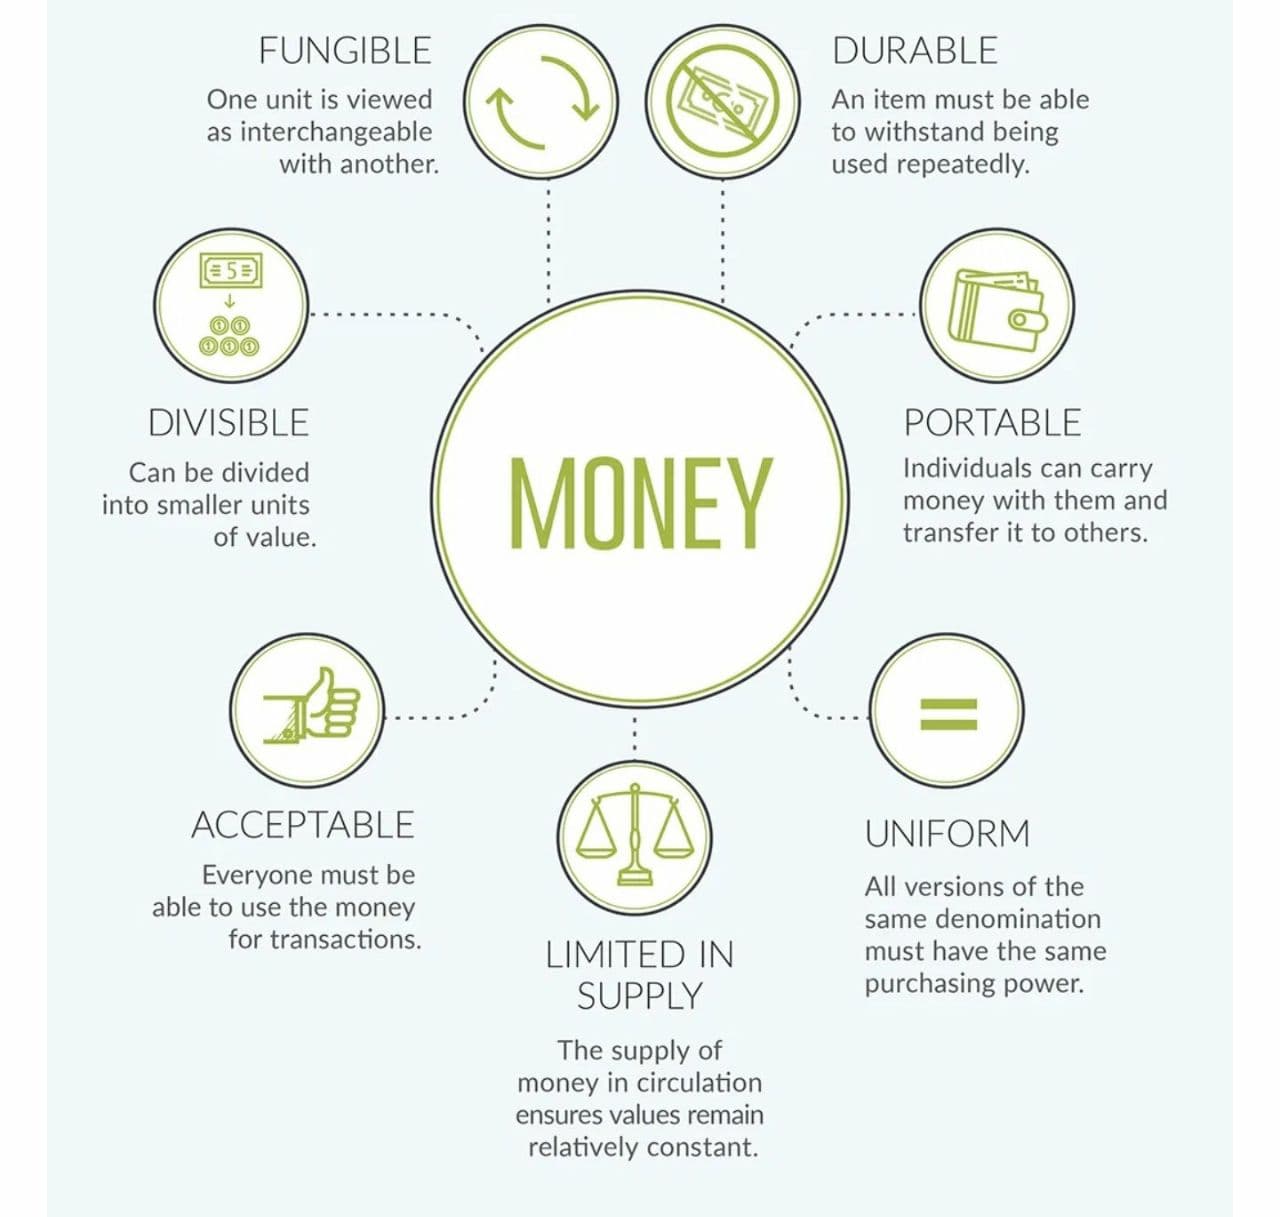 Sound money fulfills all three functions of money - SoV, MoE, UoA